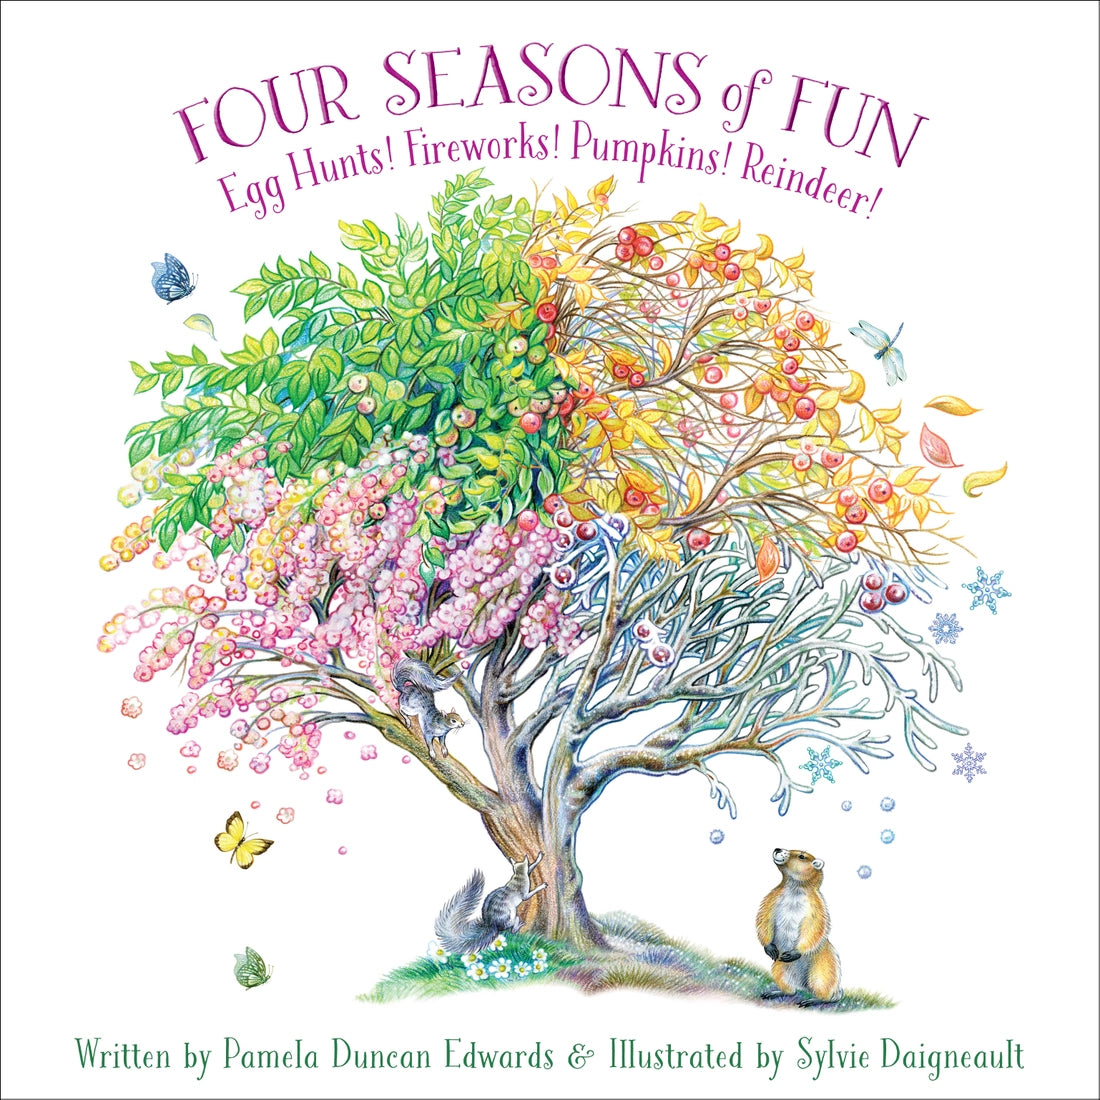 Four Seasons of Love